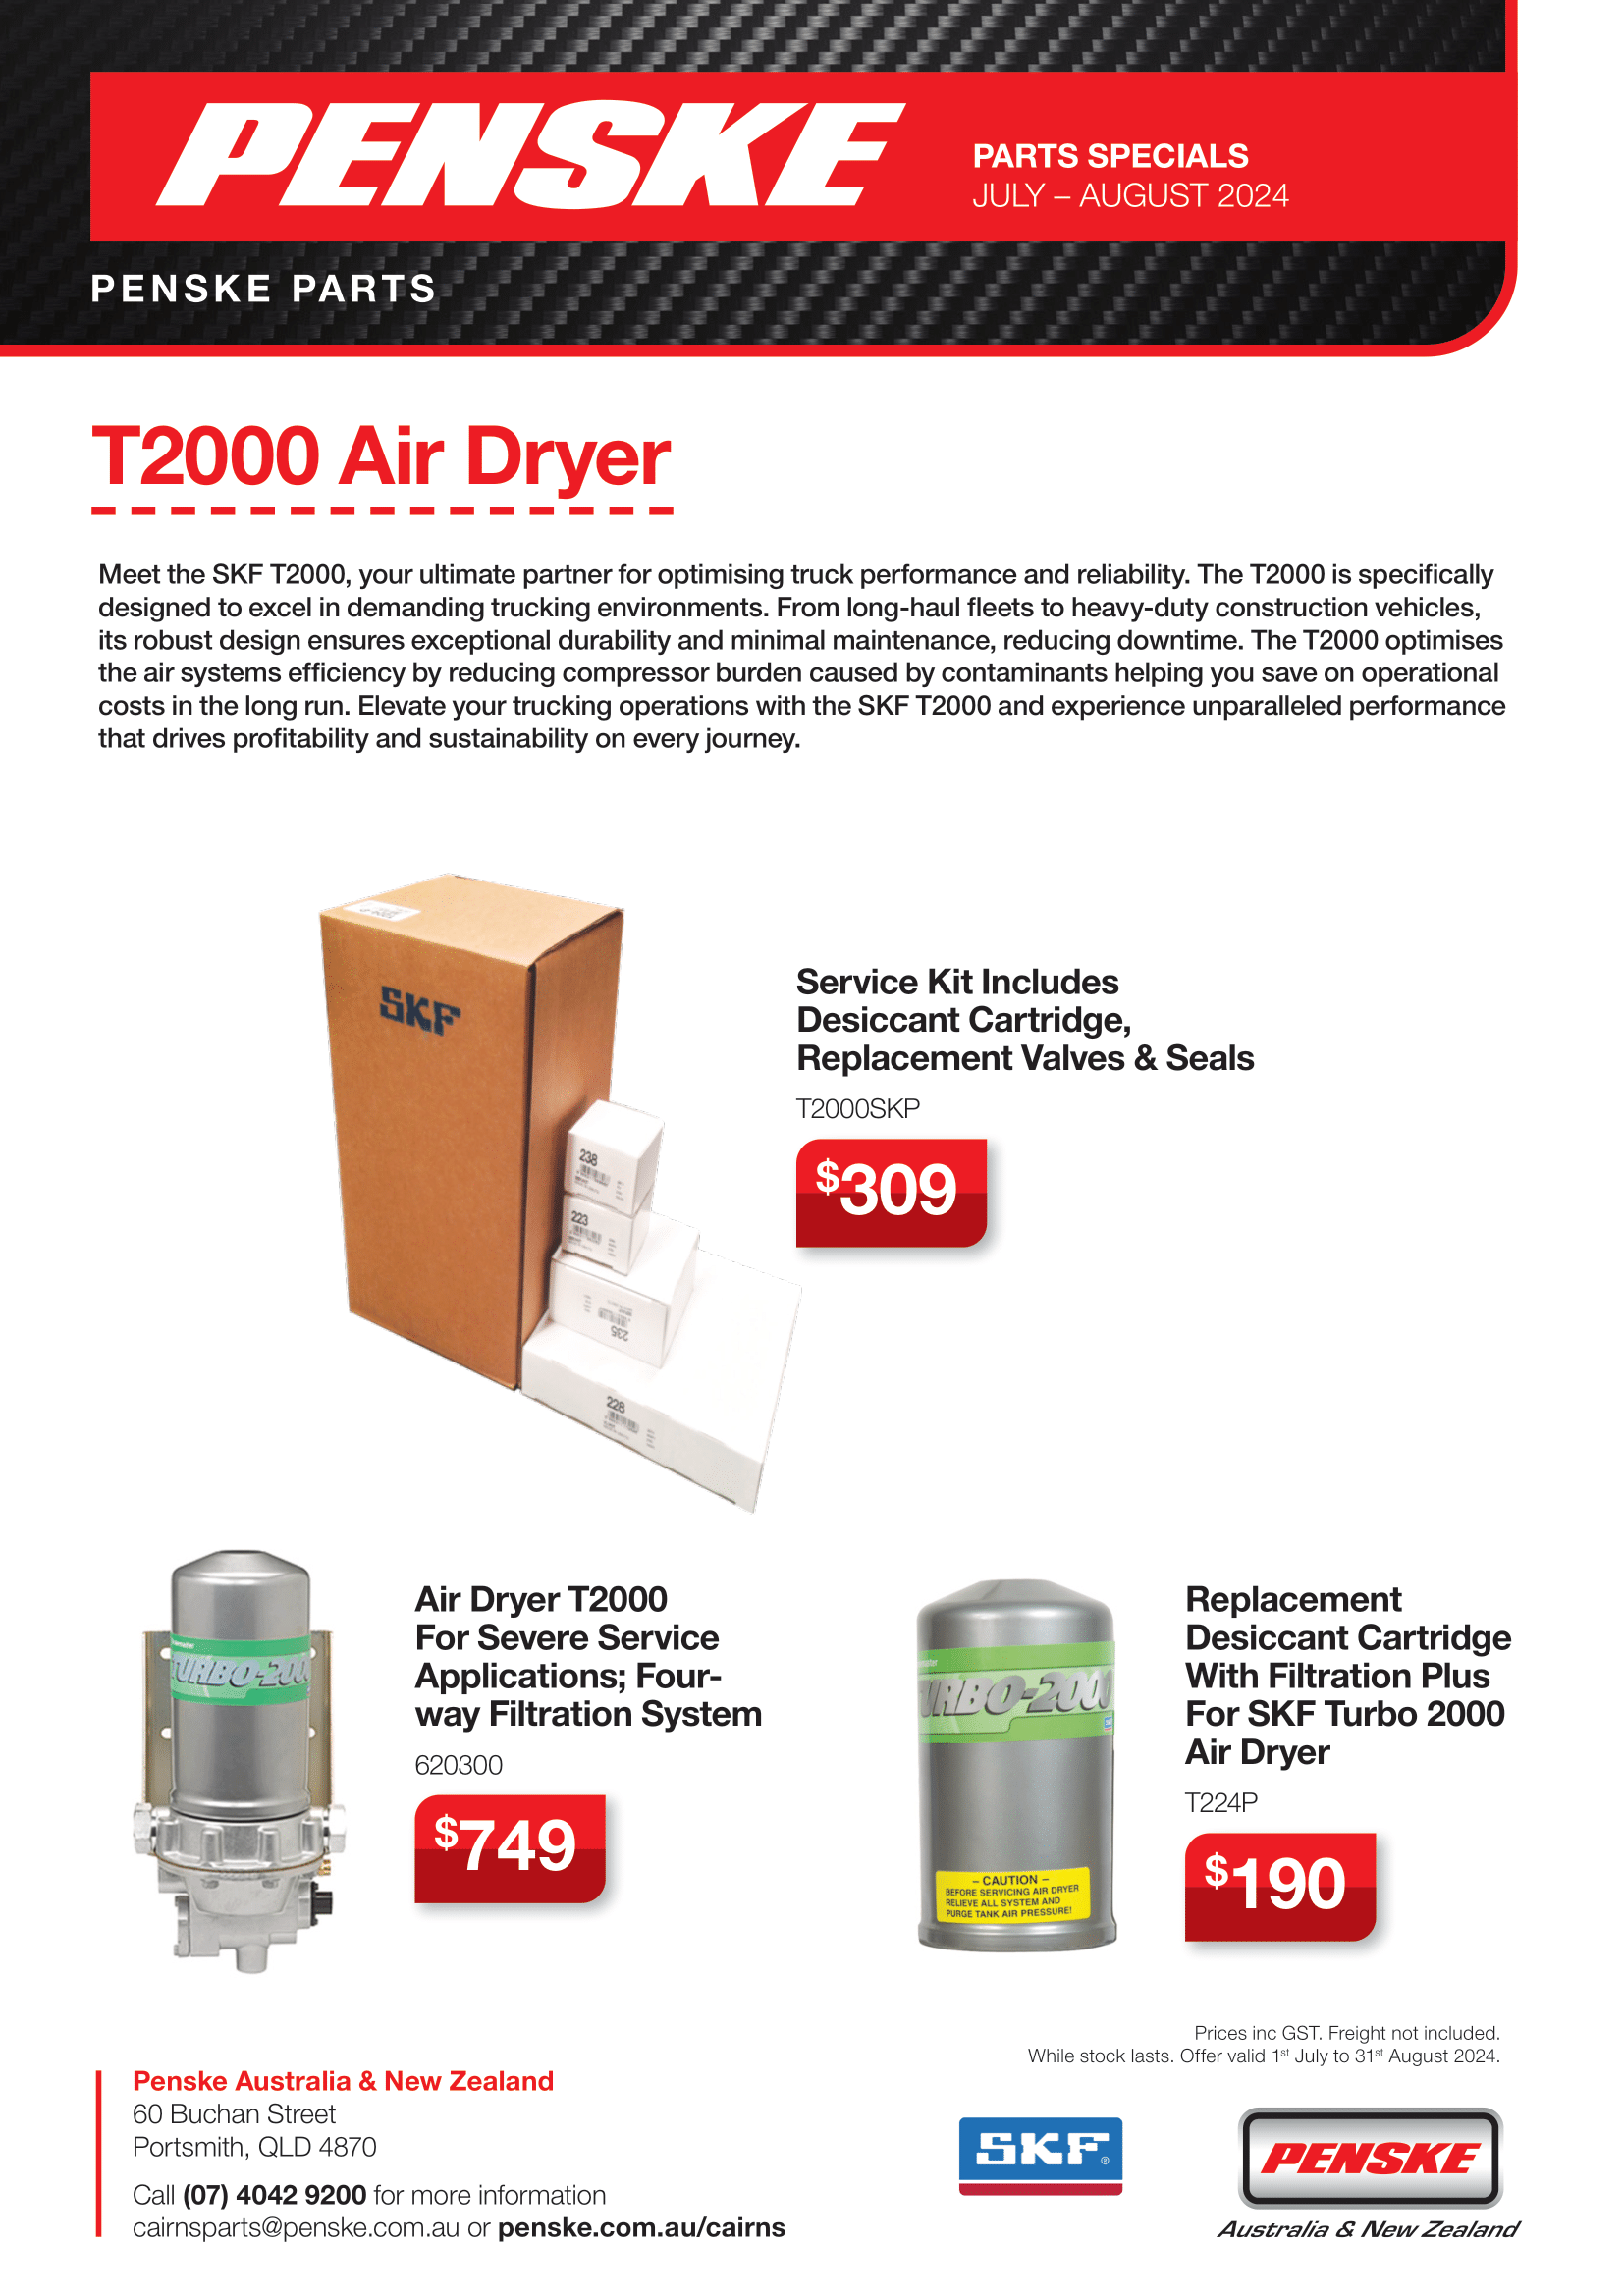 T2000 Air Dryer